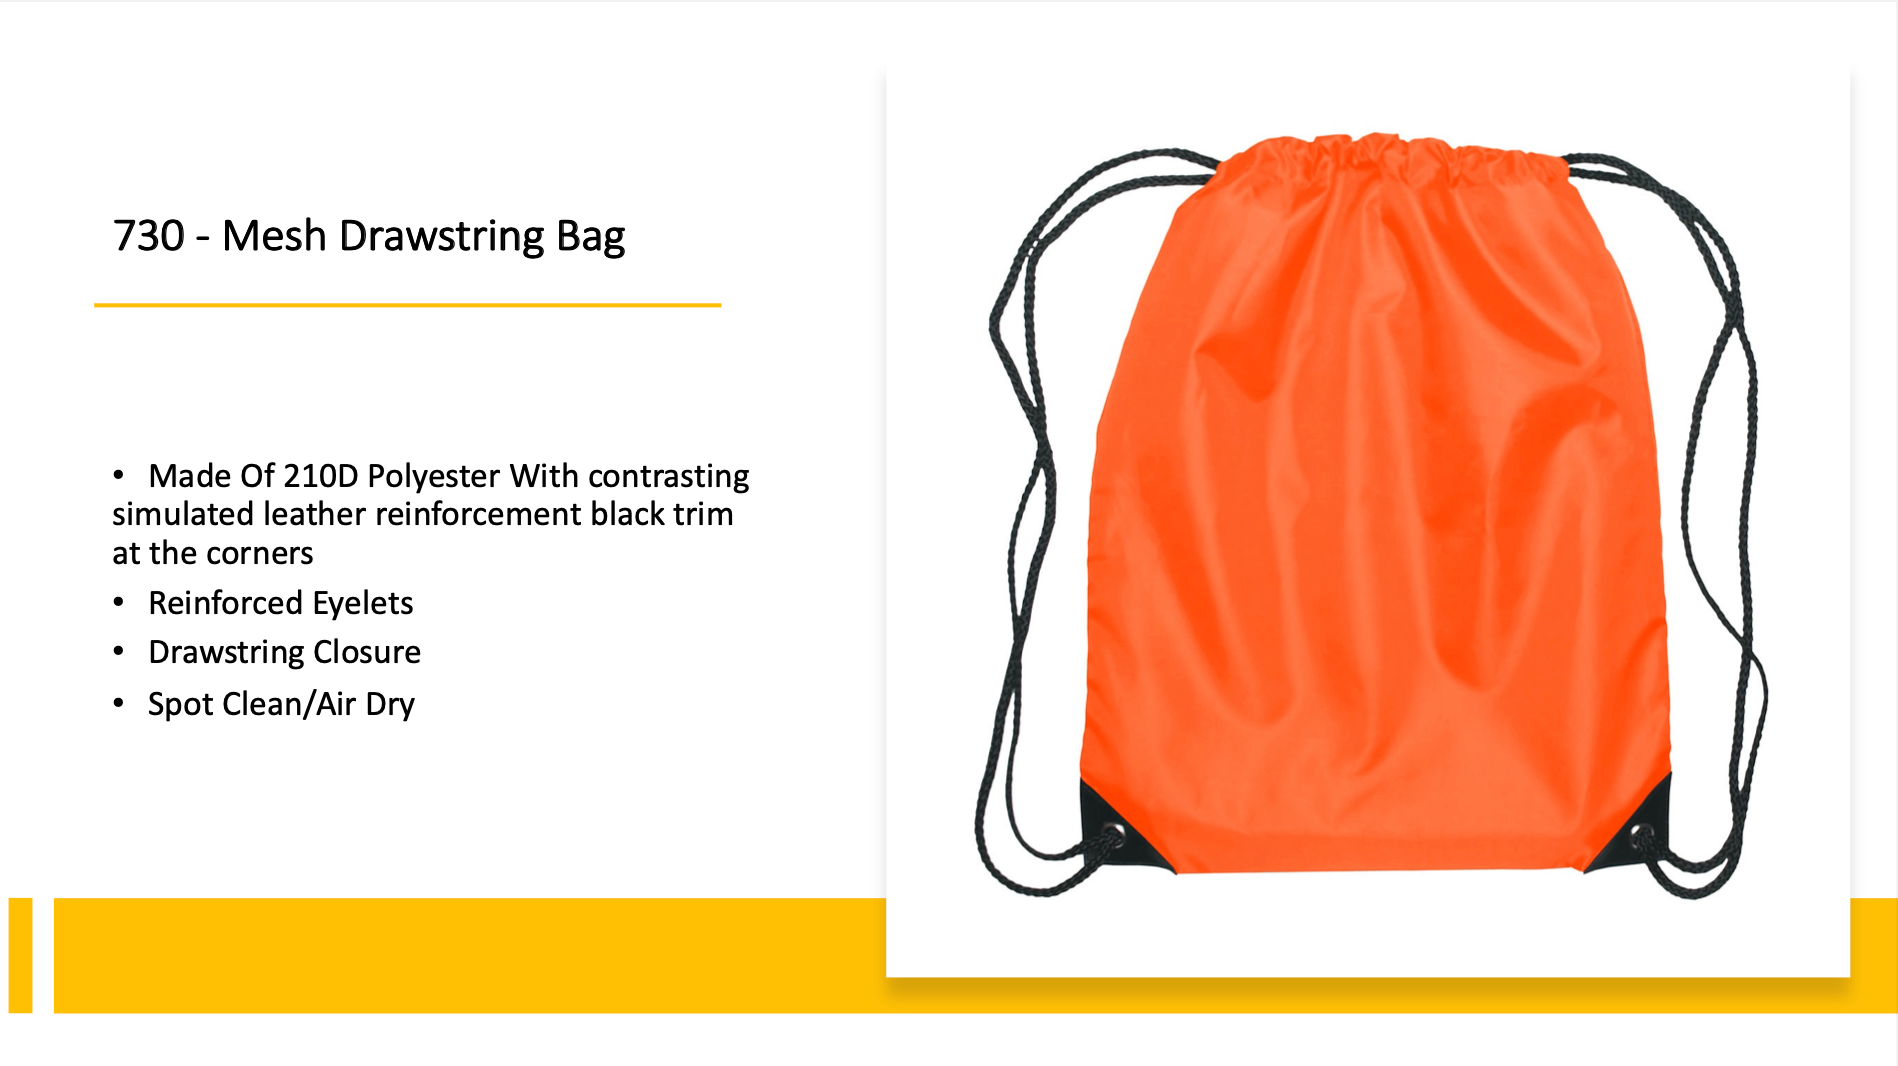 Mesh drawstring bag - Cleaning Ideas 